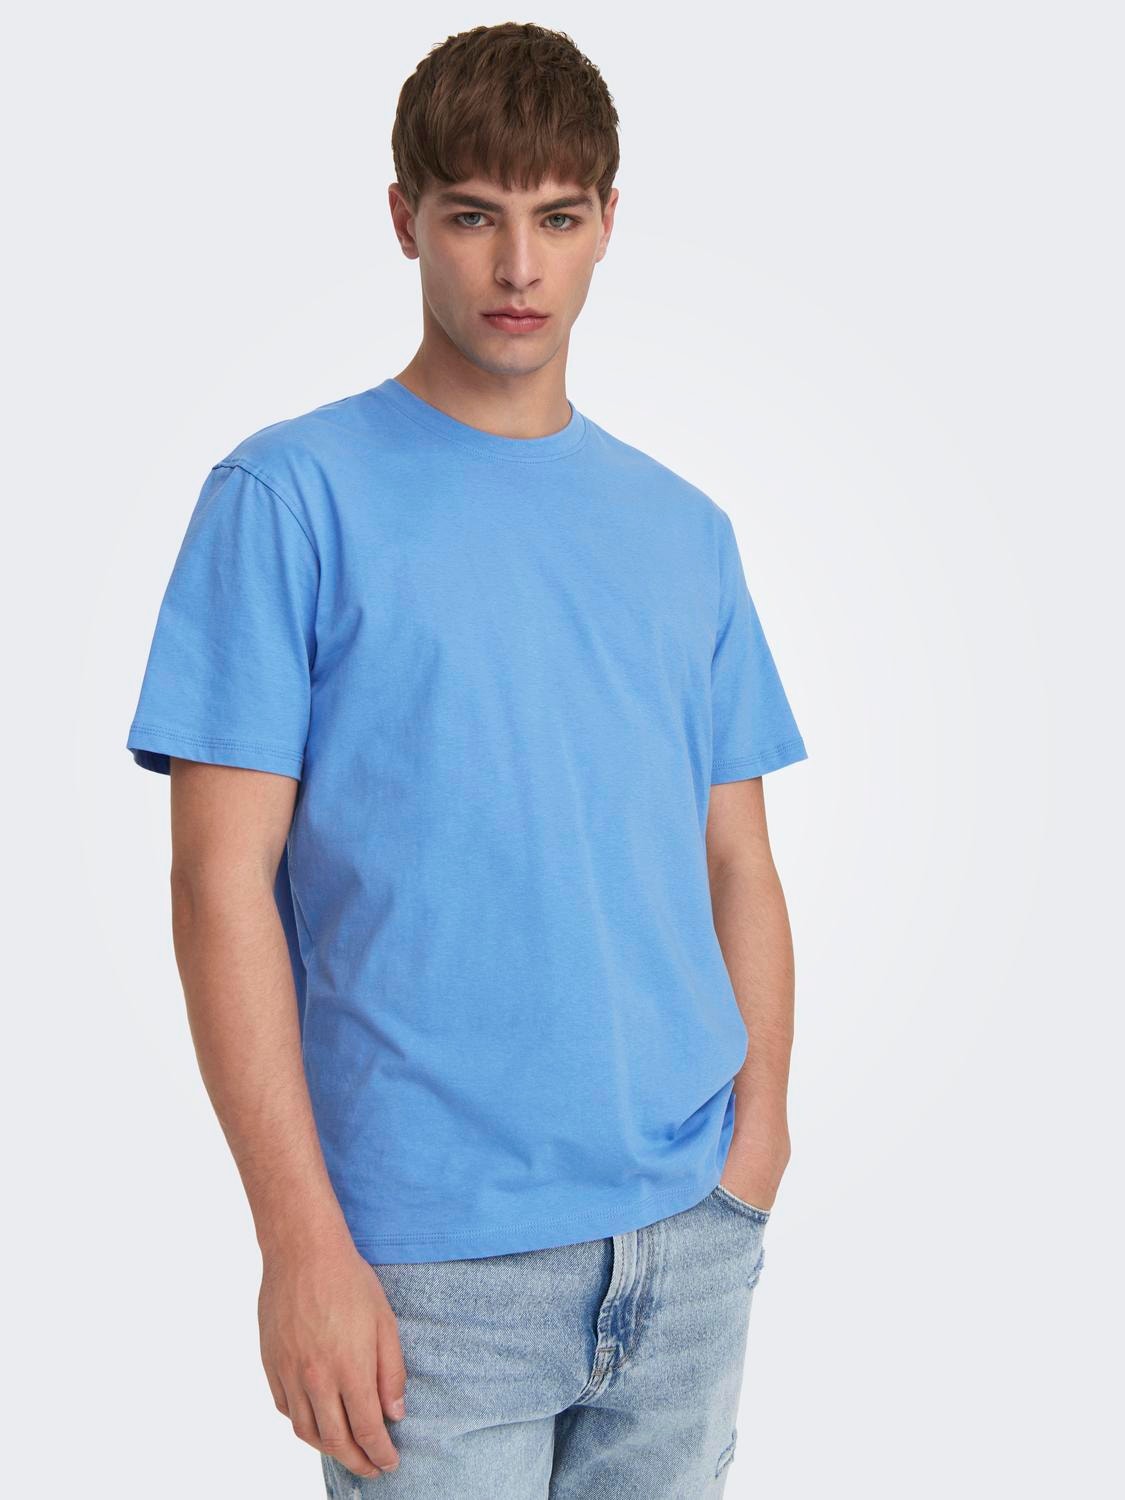 O-neck t-shirt | Light Blue | ONLY & SONS®